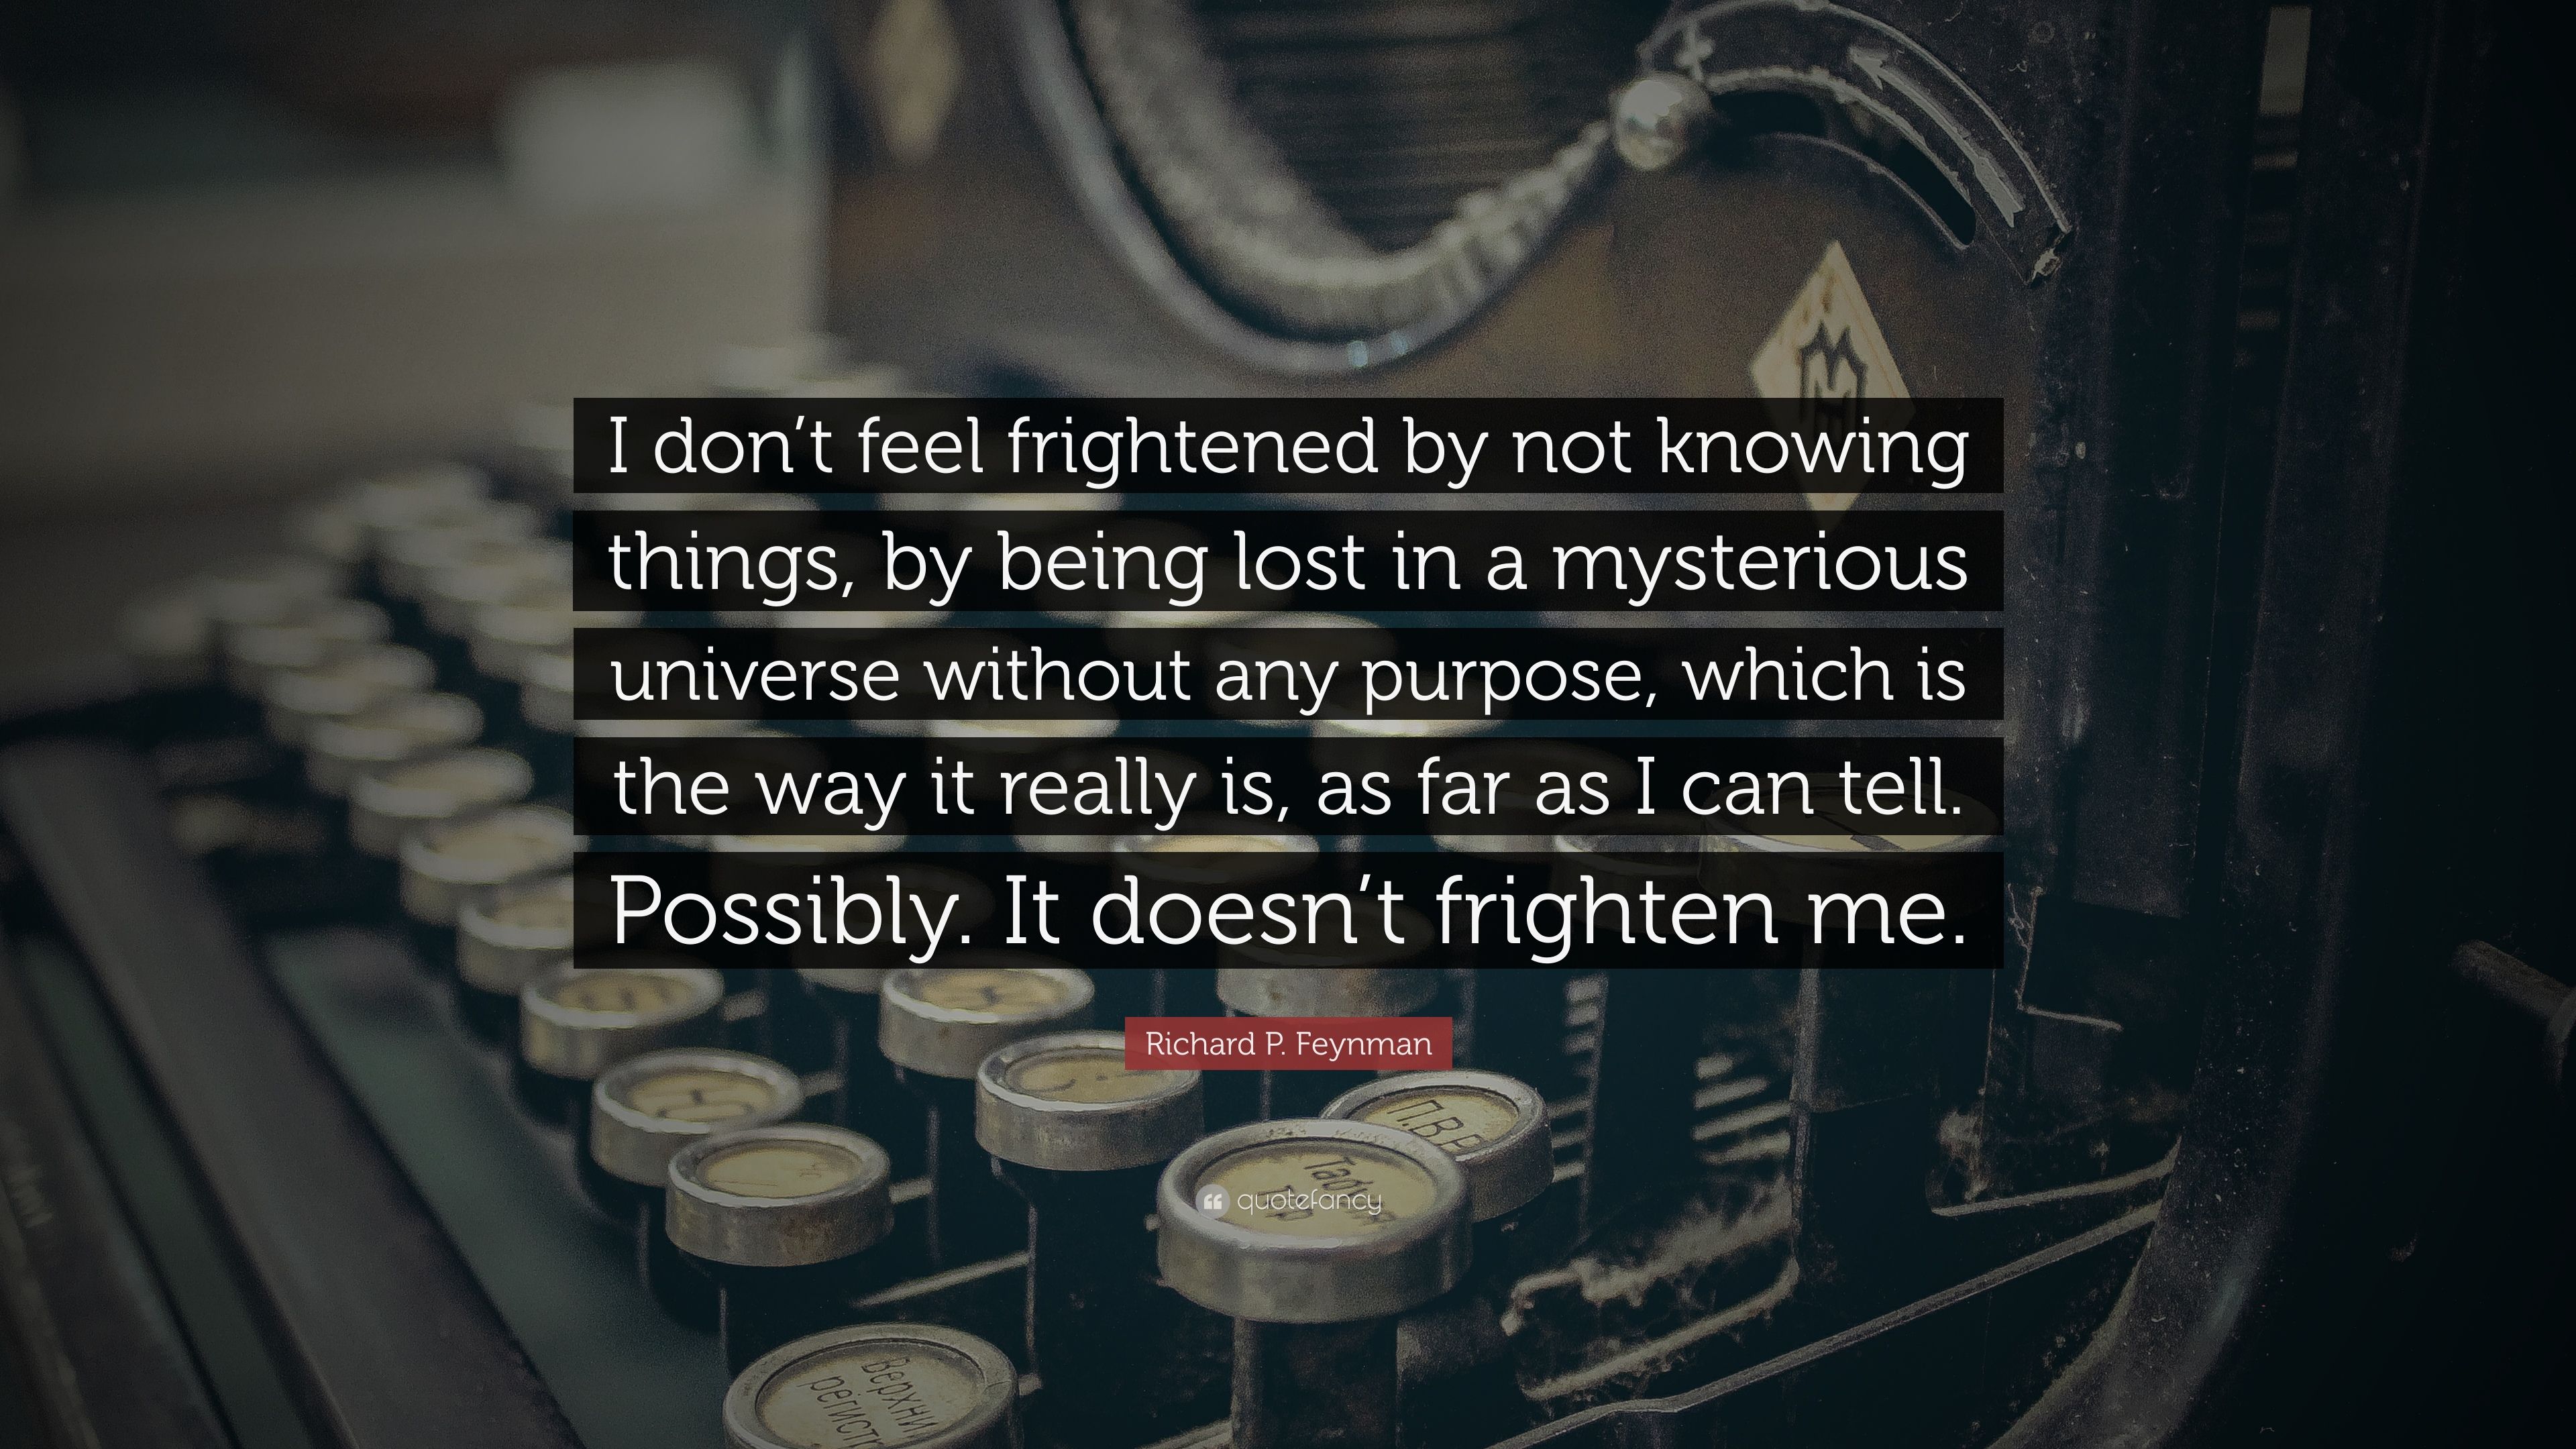 Richard P. Feynman Quote: “I don't feel frightened